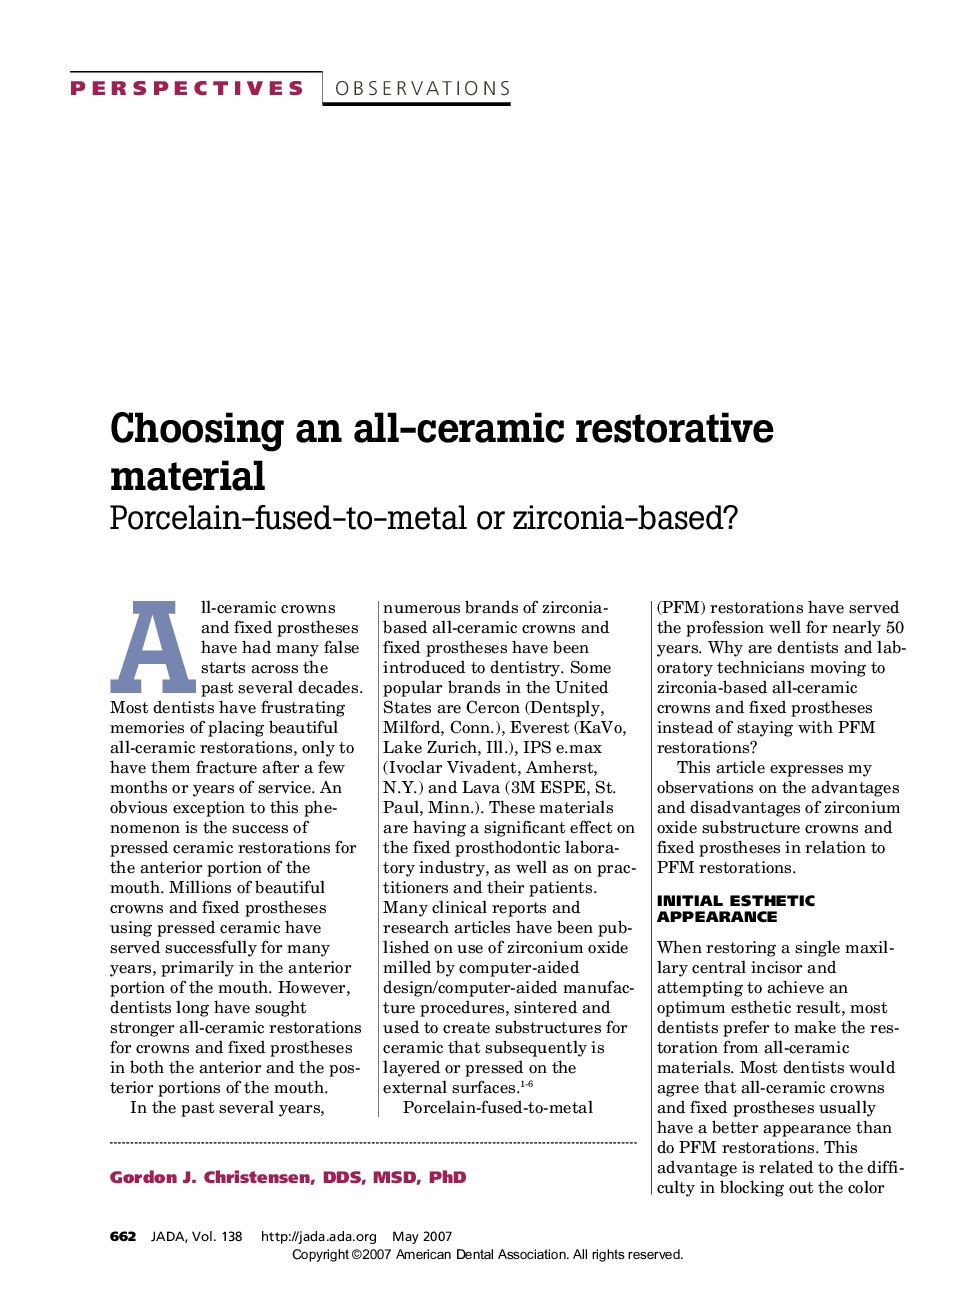 Choosing an all-ceramic restorative material